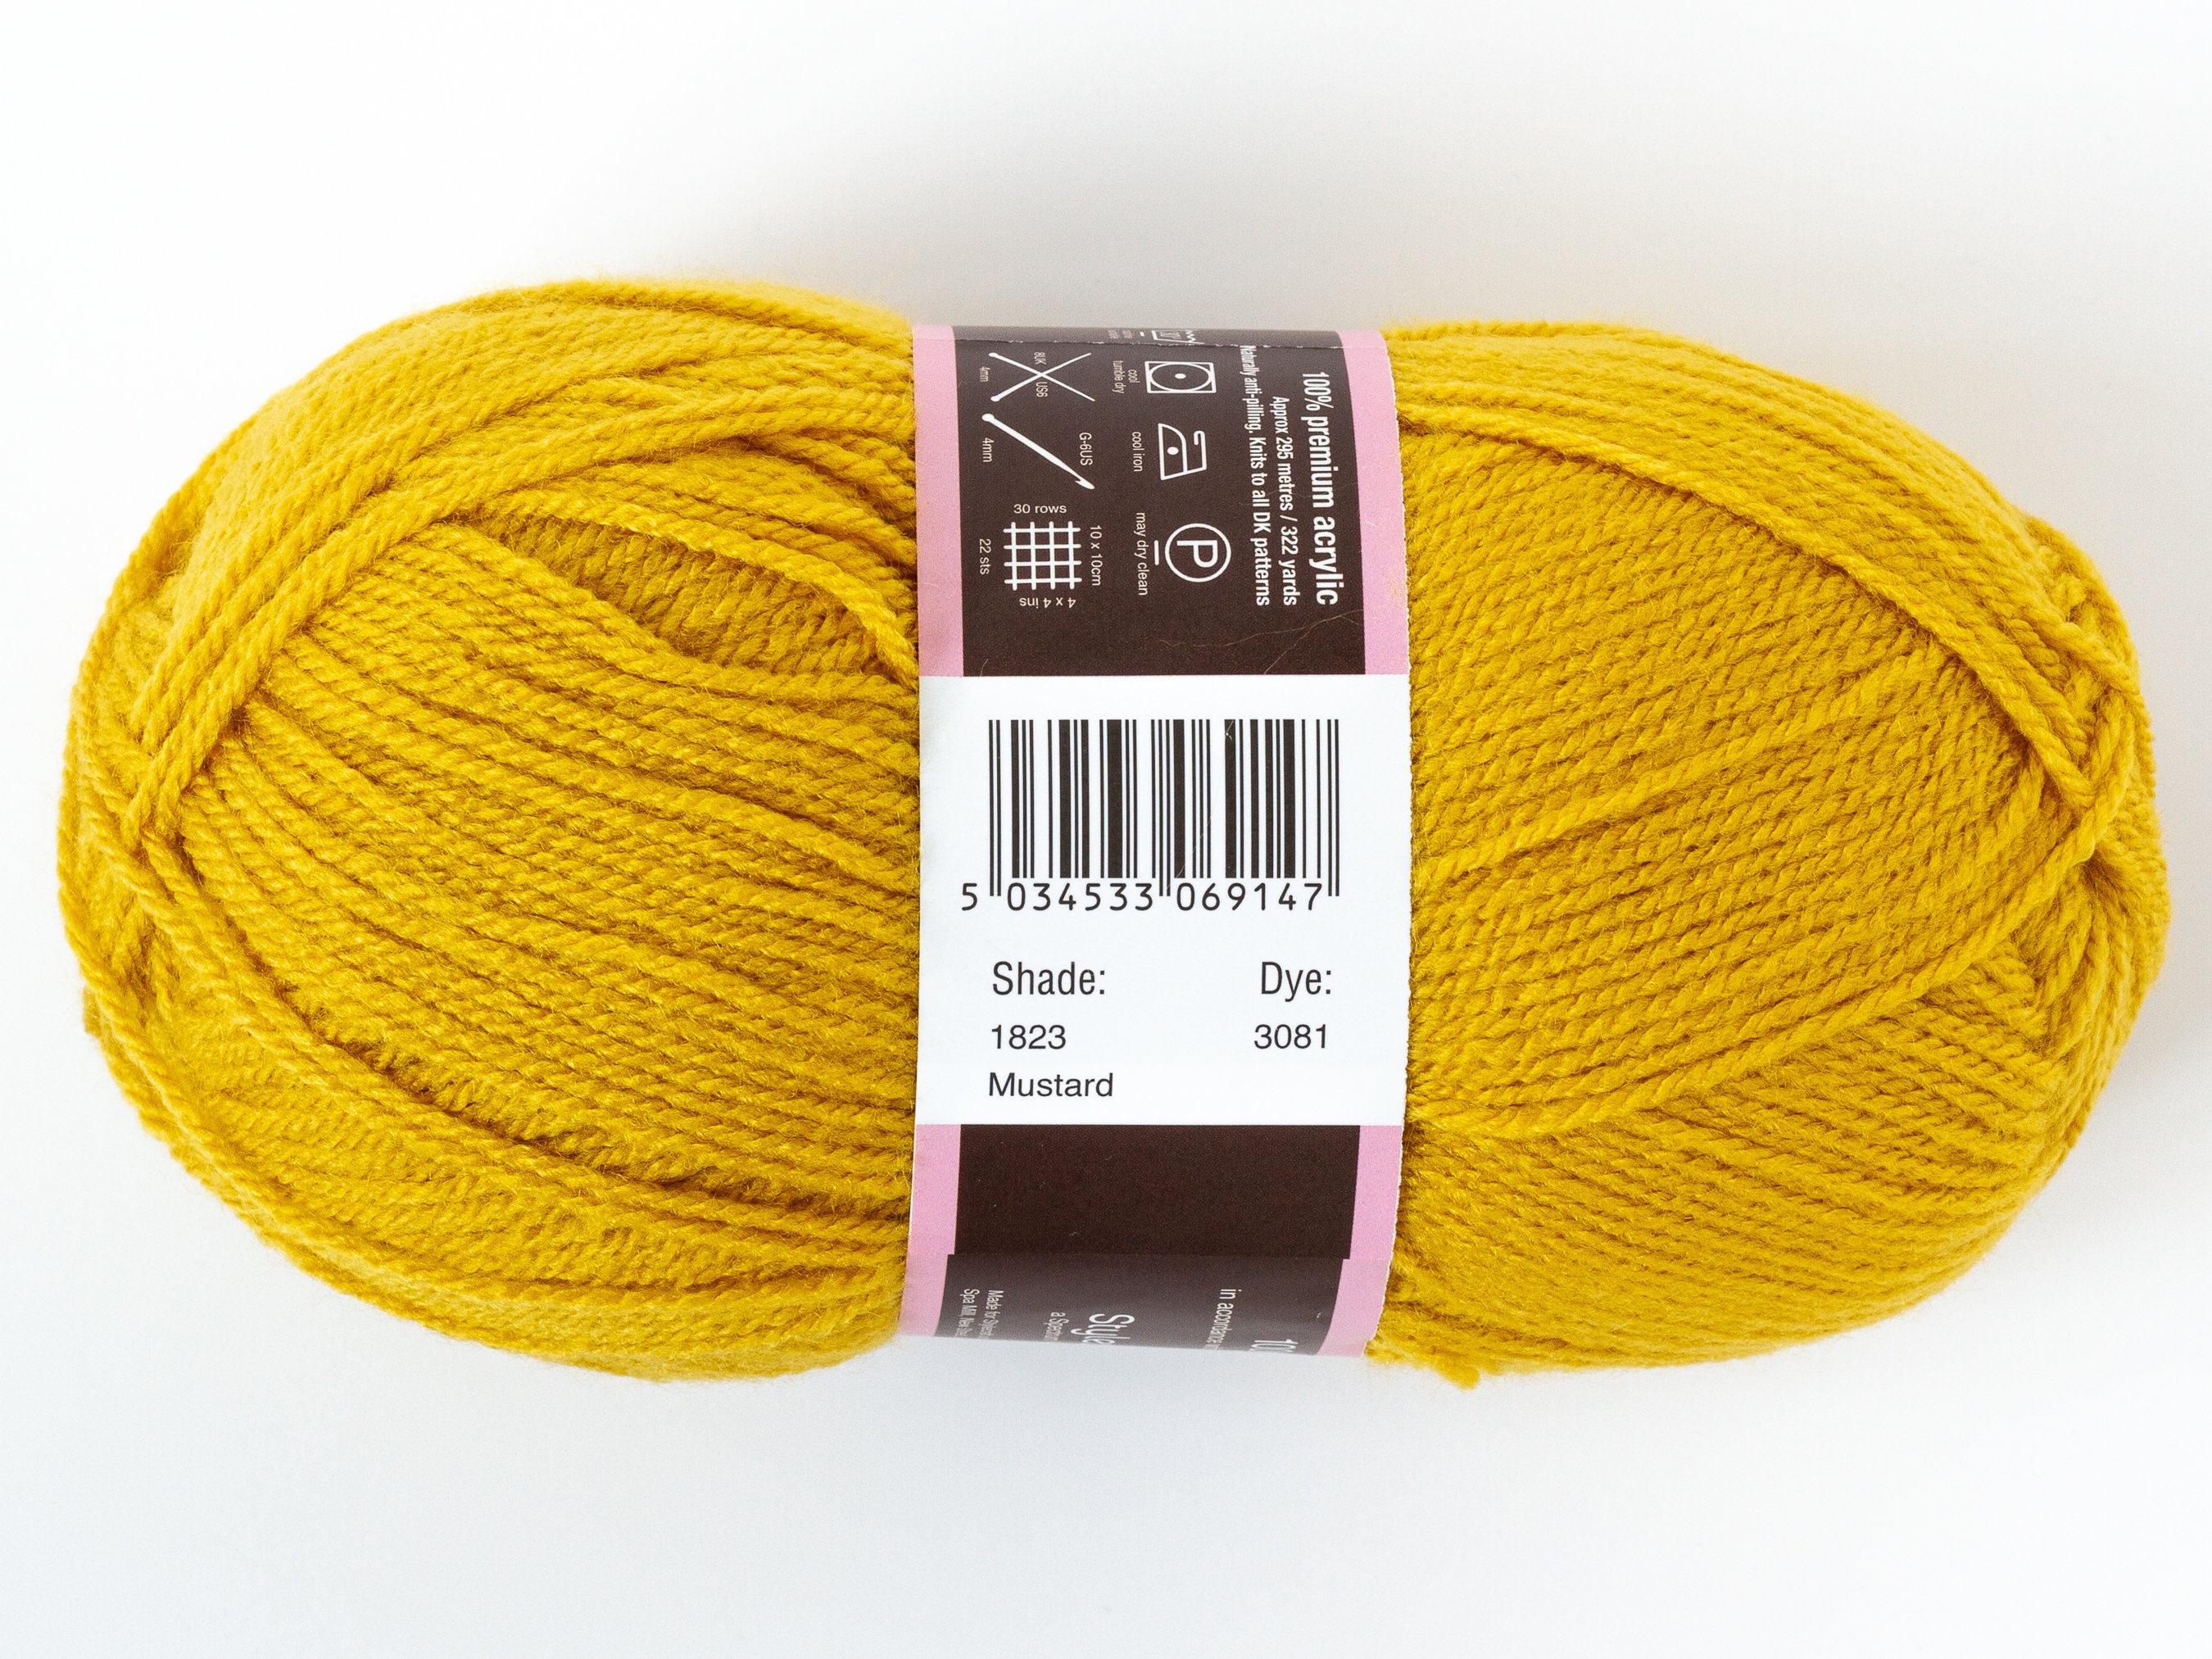 Mixed lot of knitting / crochet wool 100 balls yarn 100g clearance sale ALL  DK 